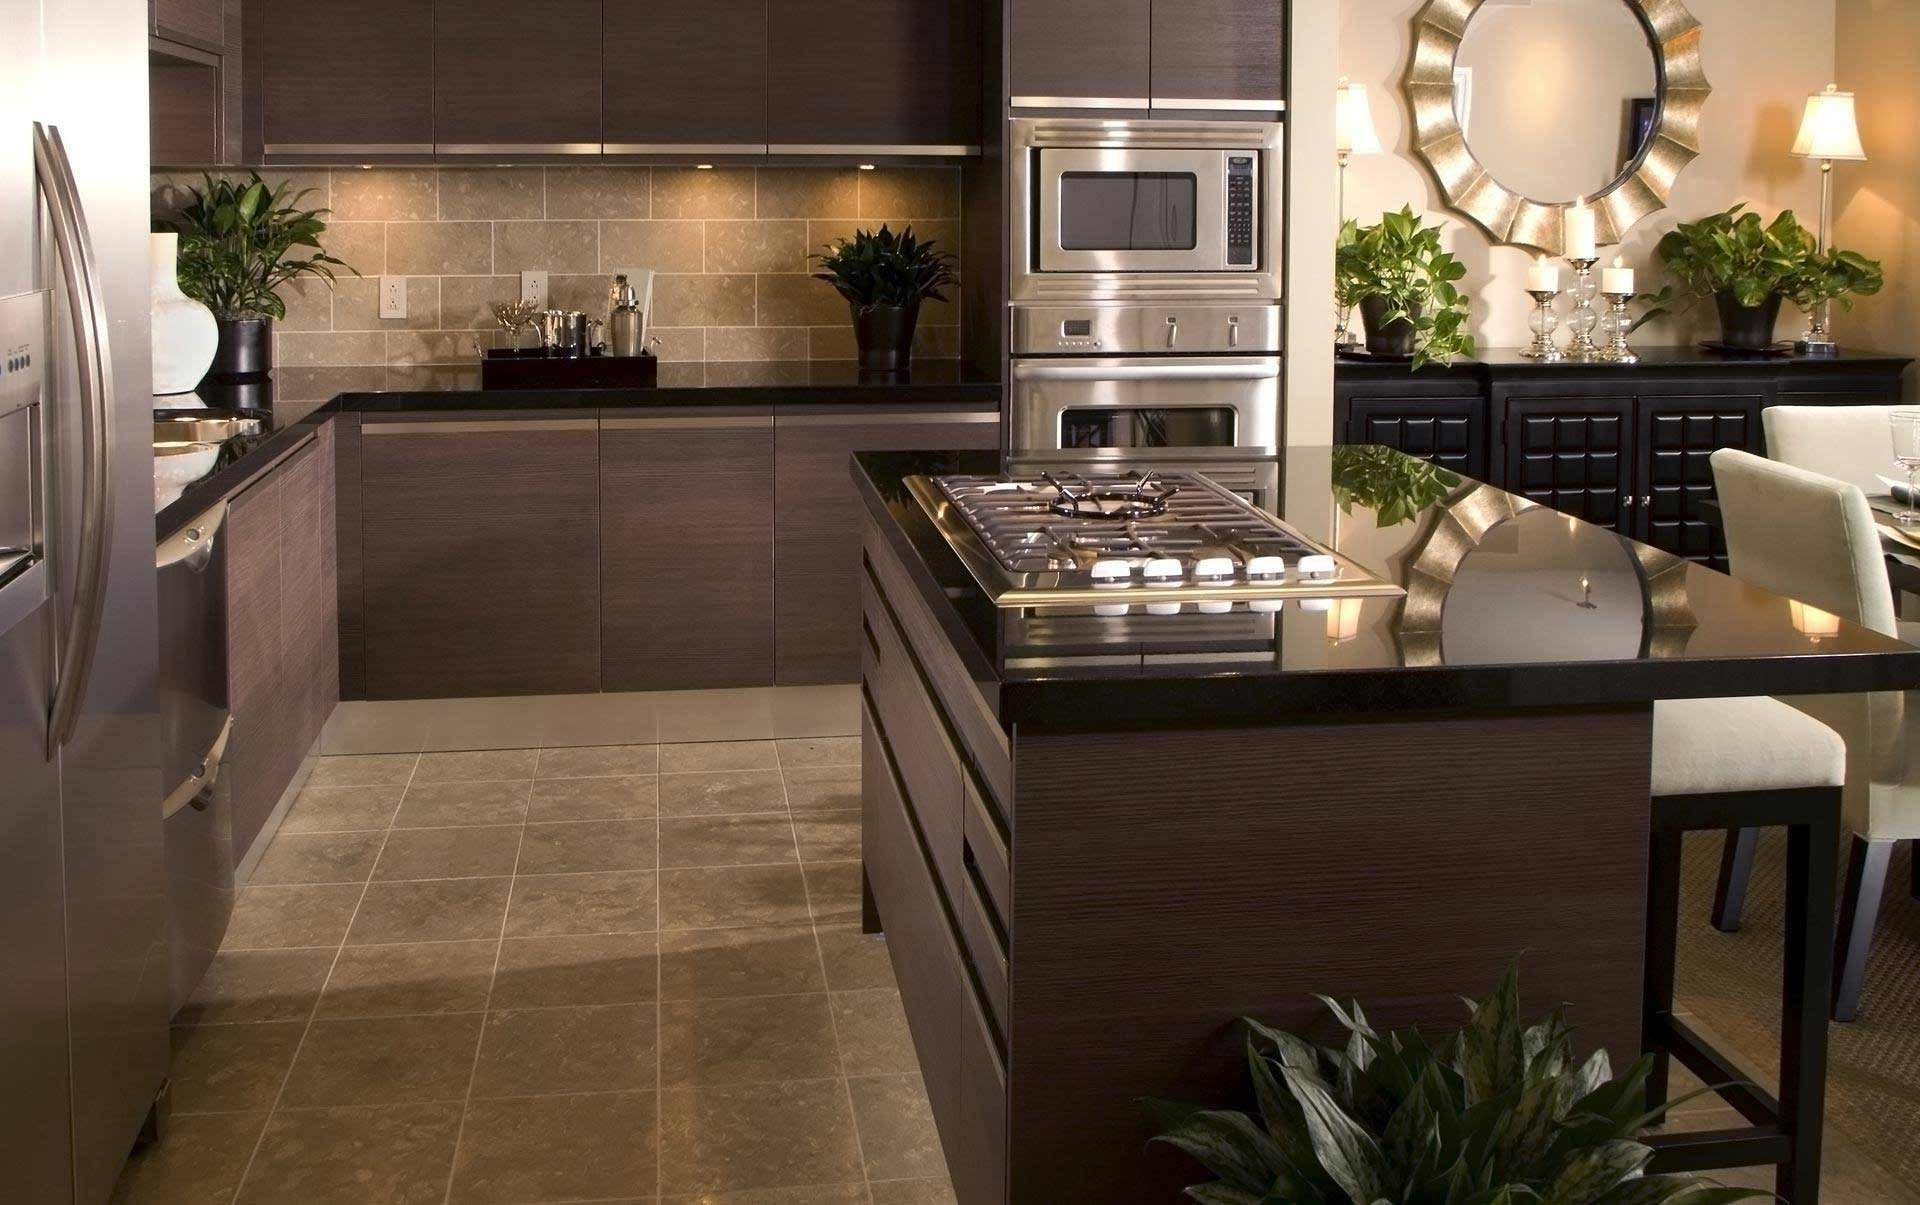 Kitchen Wall Tiles Design
 Top 65 Luxury Kitchen Design Ideas Exclusive Gallery